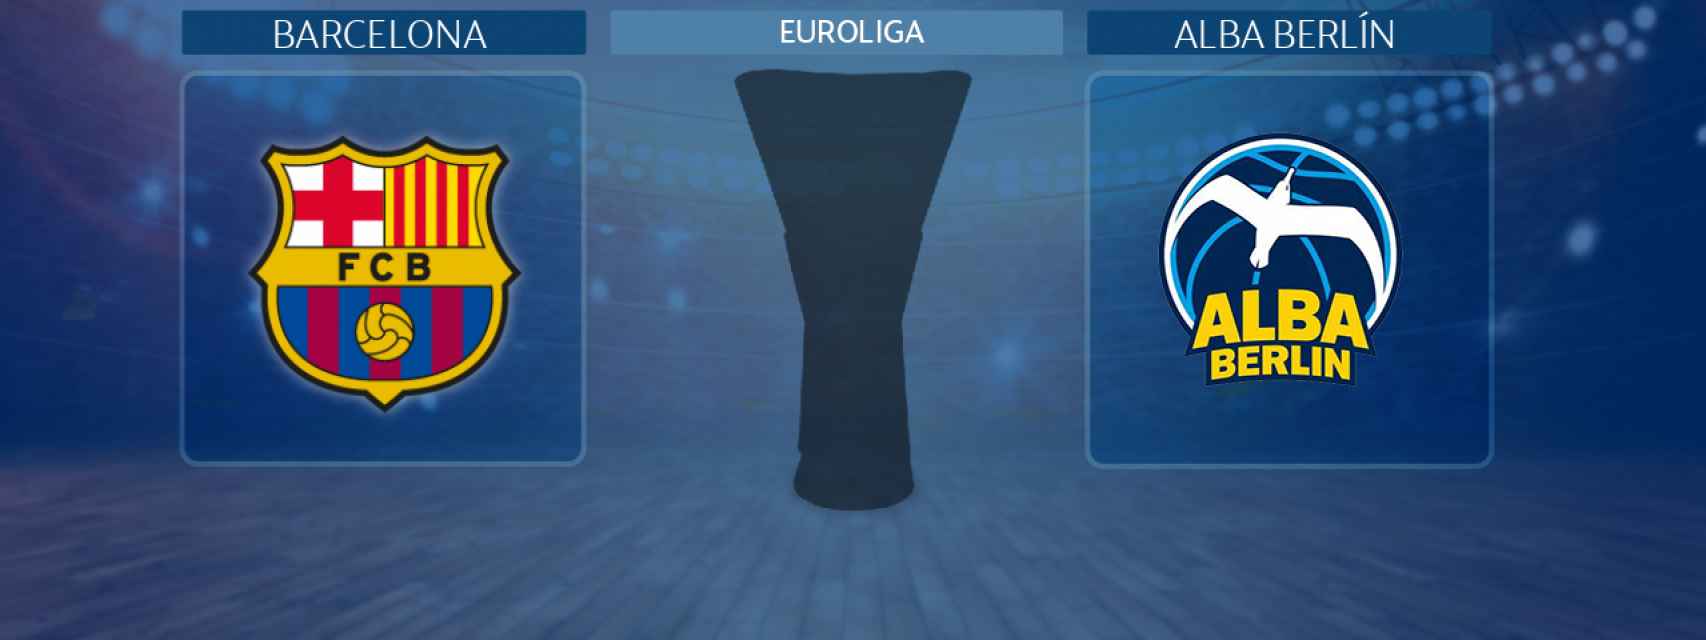 Barcelona - Alba Berlín, partido de la Euroliga